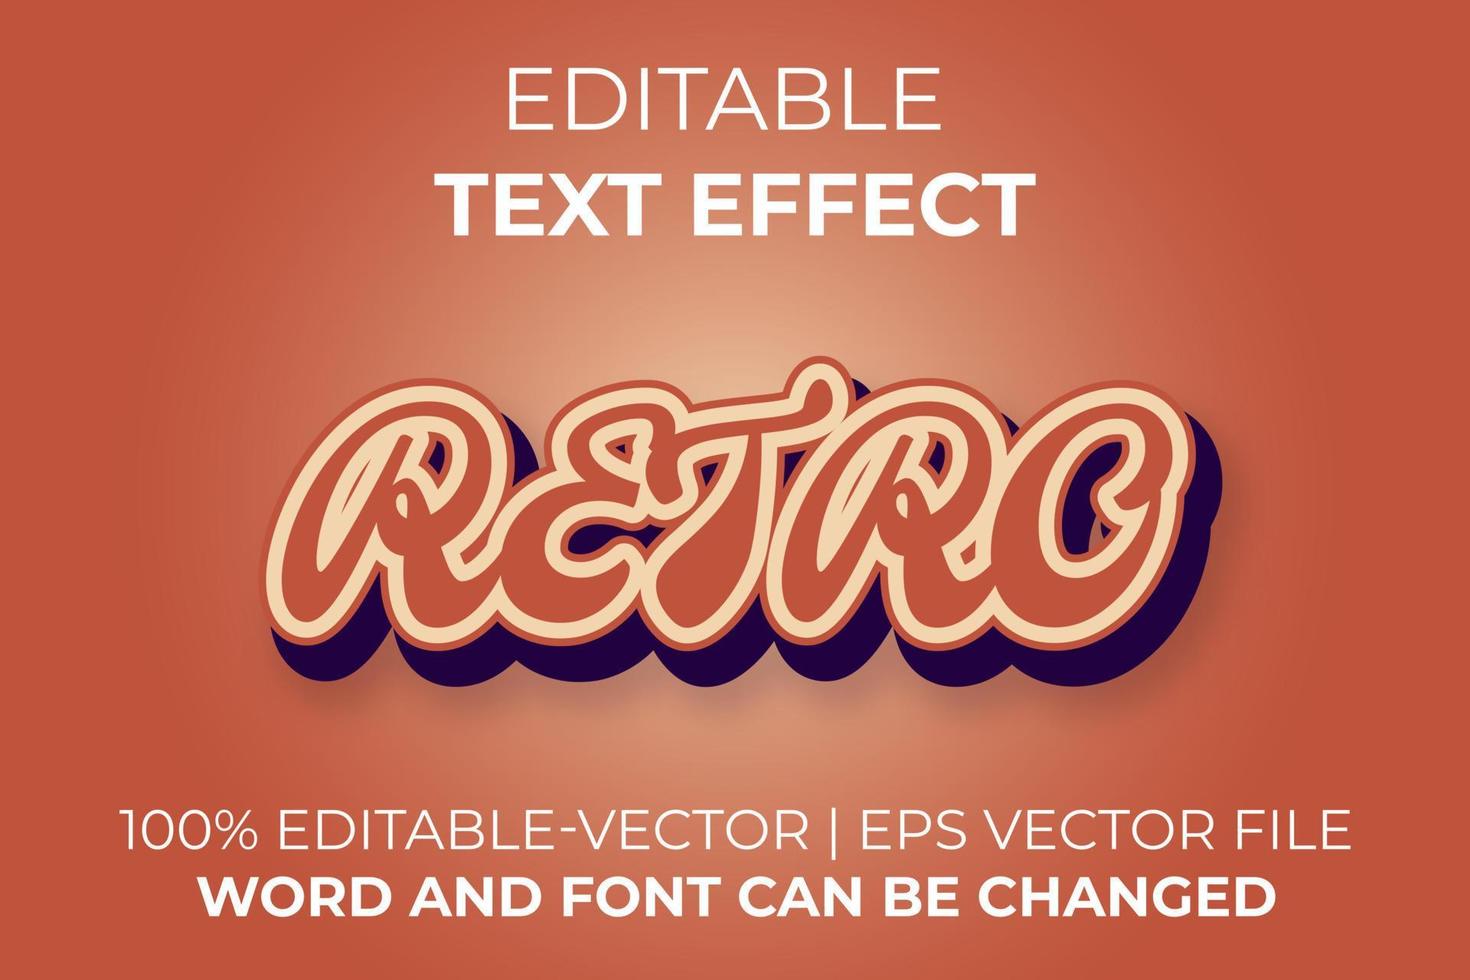 Retro text effect, easy to edit vector